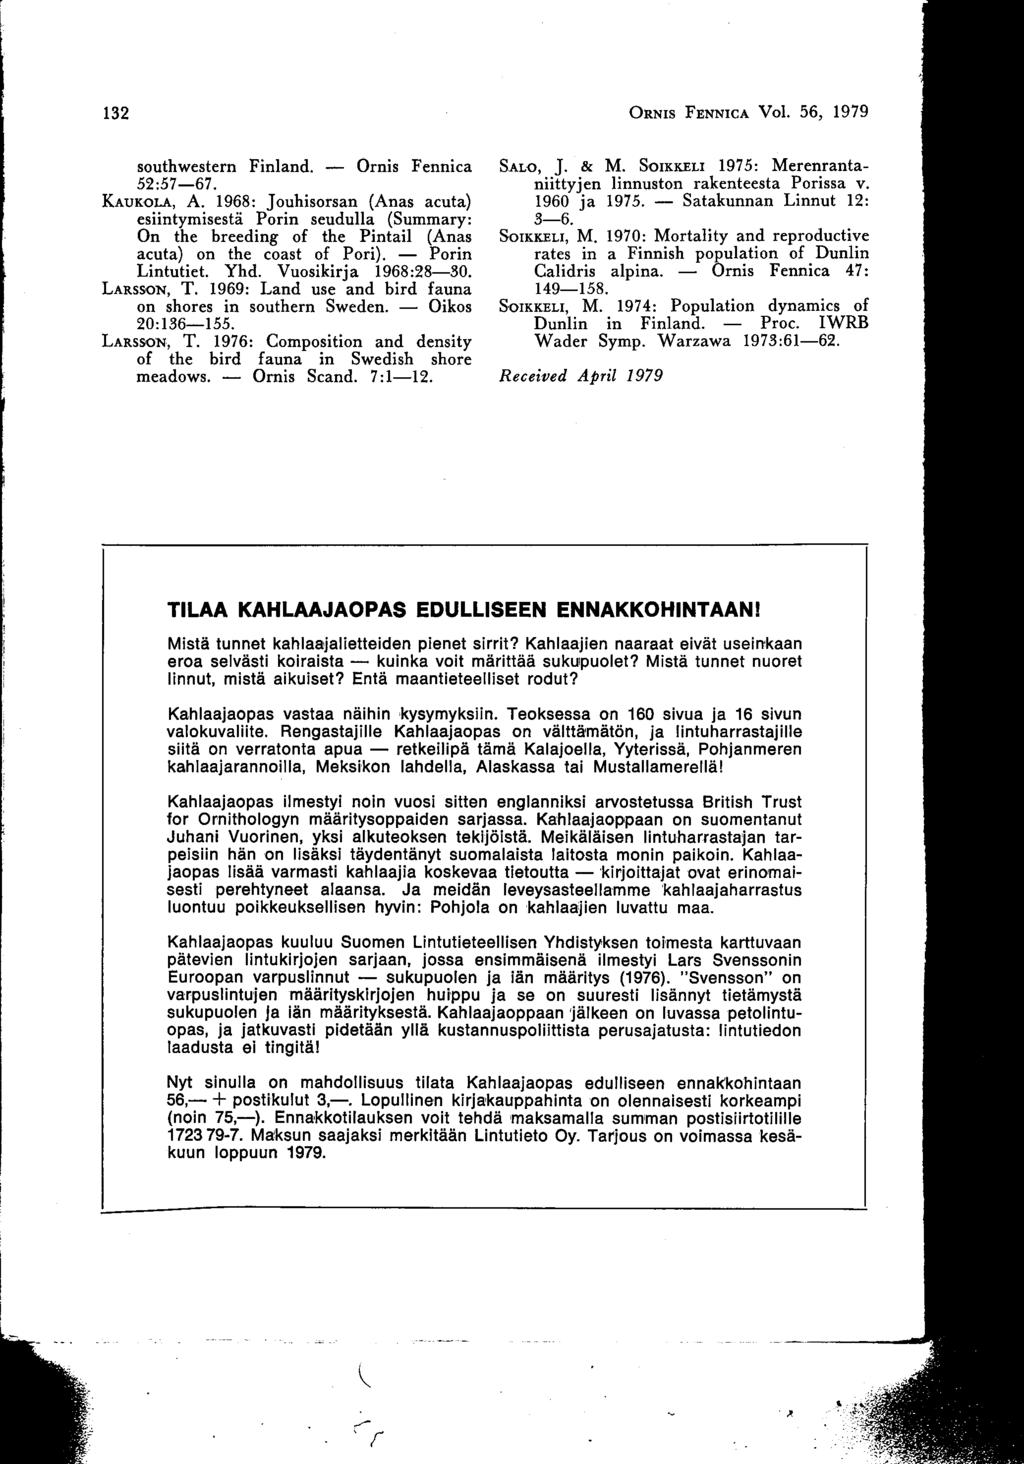 132 ORNIs FENNICA Vol. 56, 1979 southwestern Finland. - Ornis Fennica SALO, J. & M. SOIKKELI 1975 : Merenrantaniittyjen linnuston rakenteesta Porissa v. 52:57-67. KAUKOLA, A.